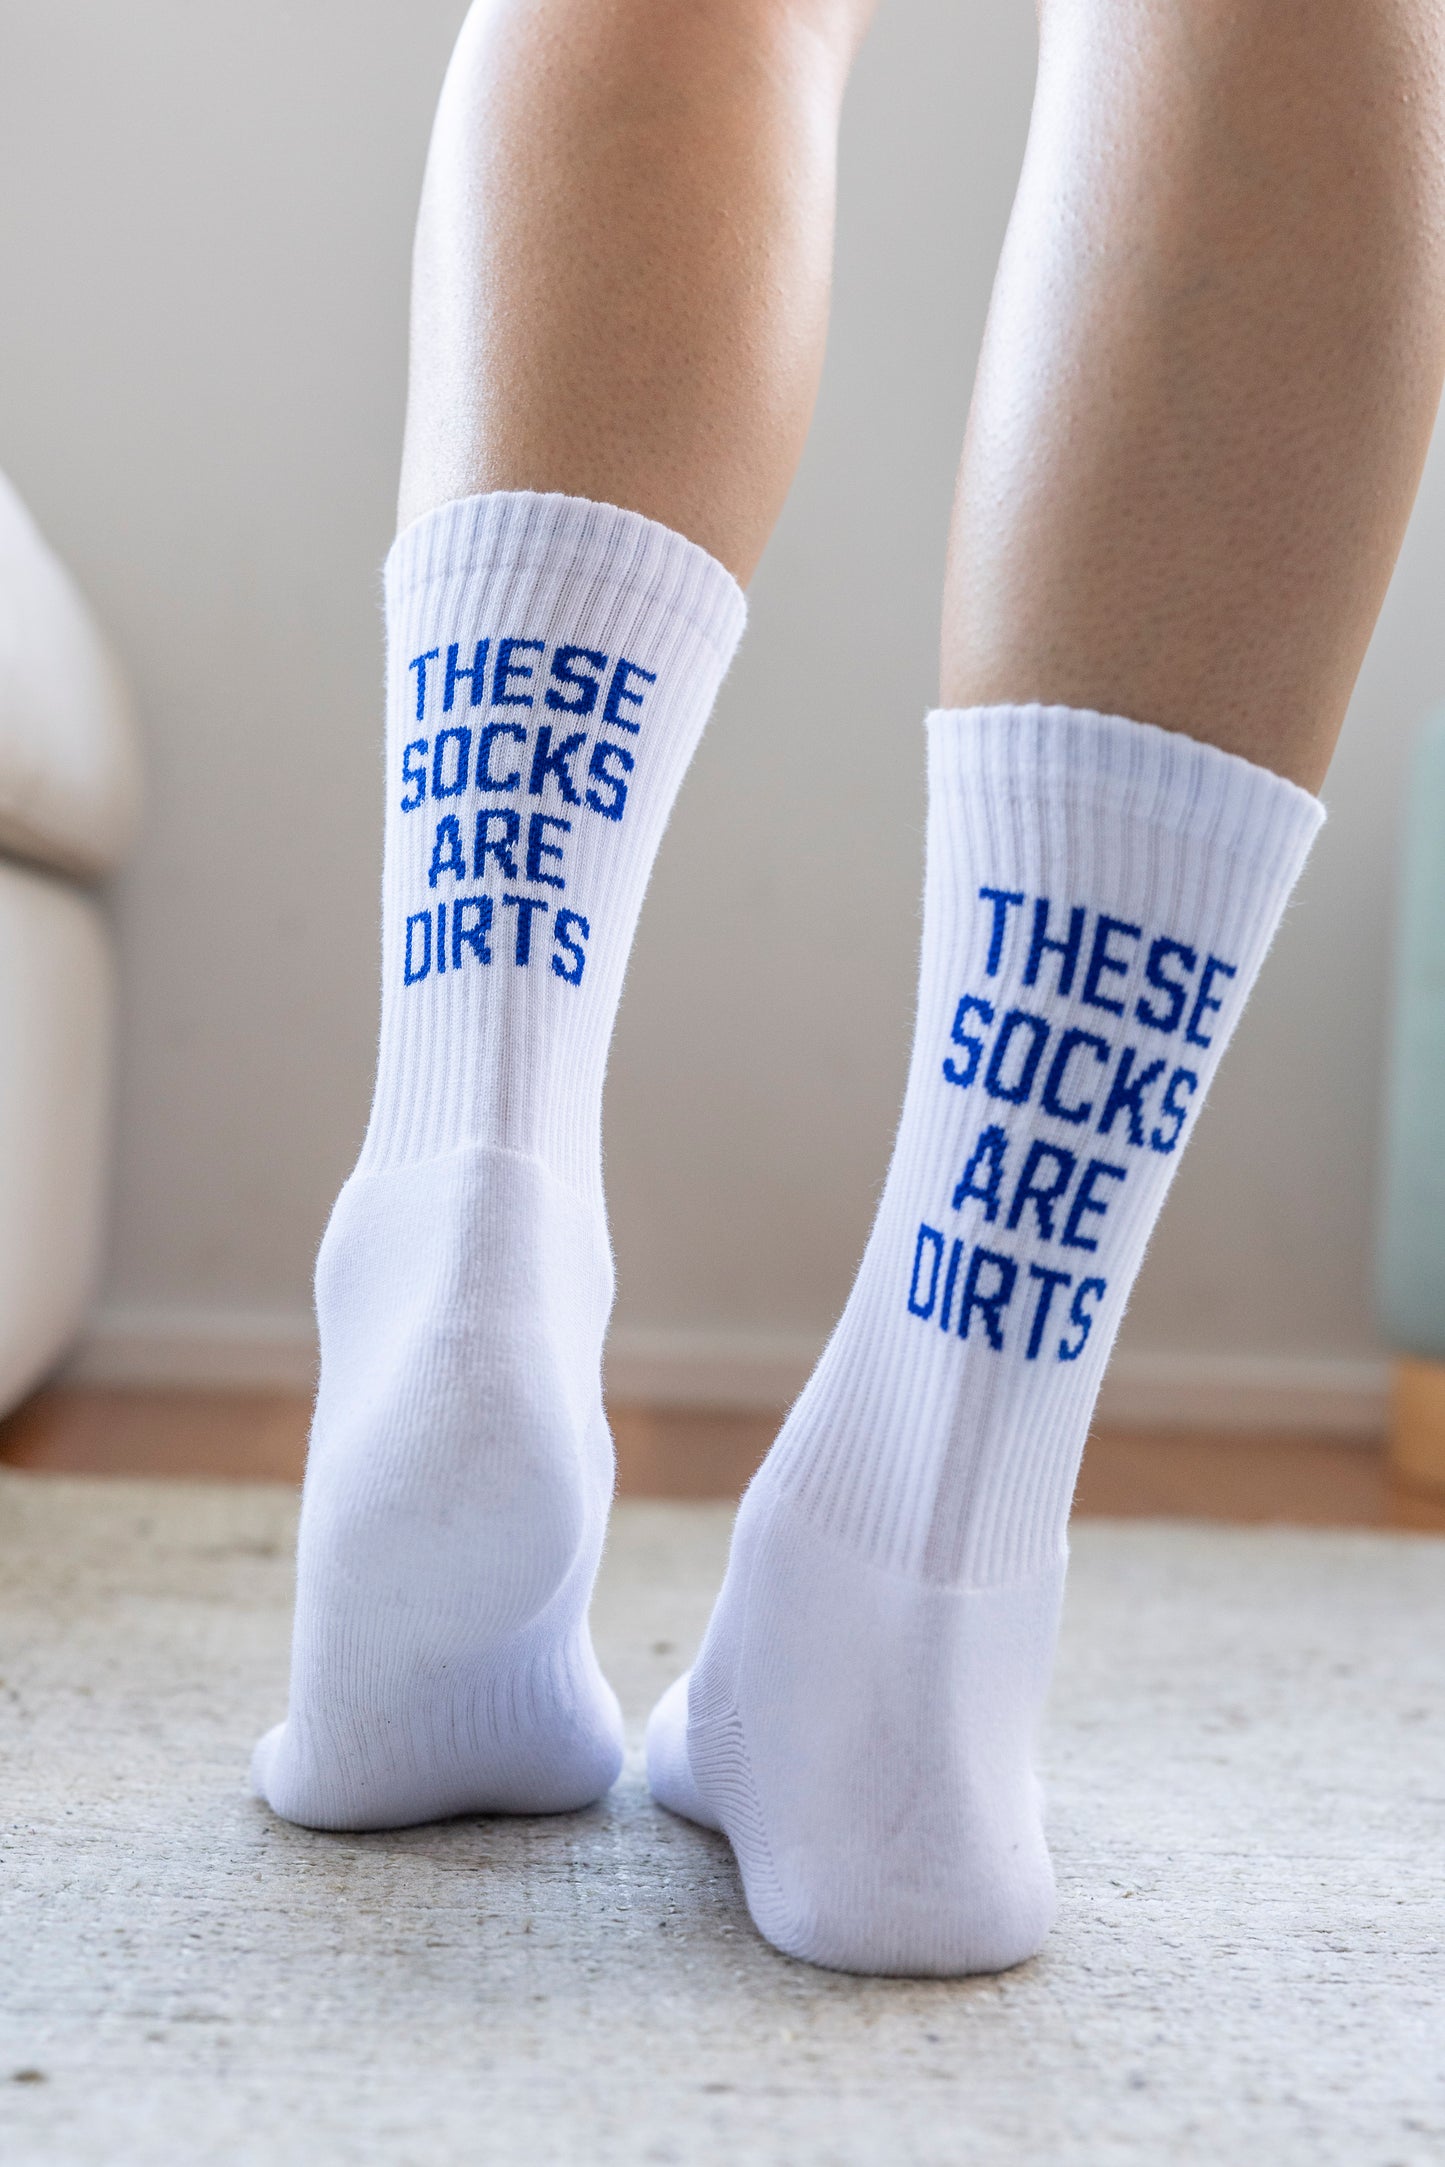 DIRTS Statement Socks Bundle